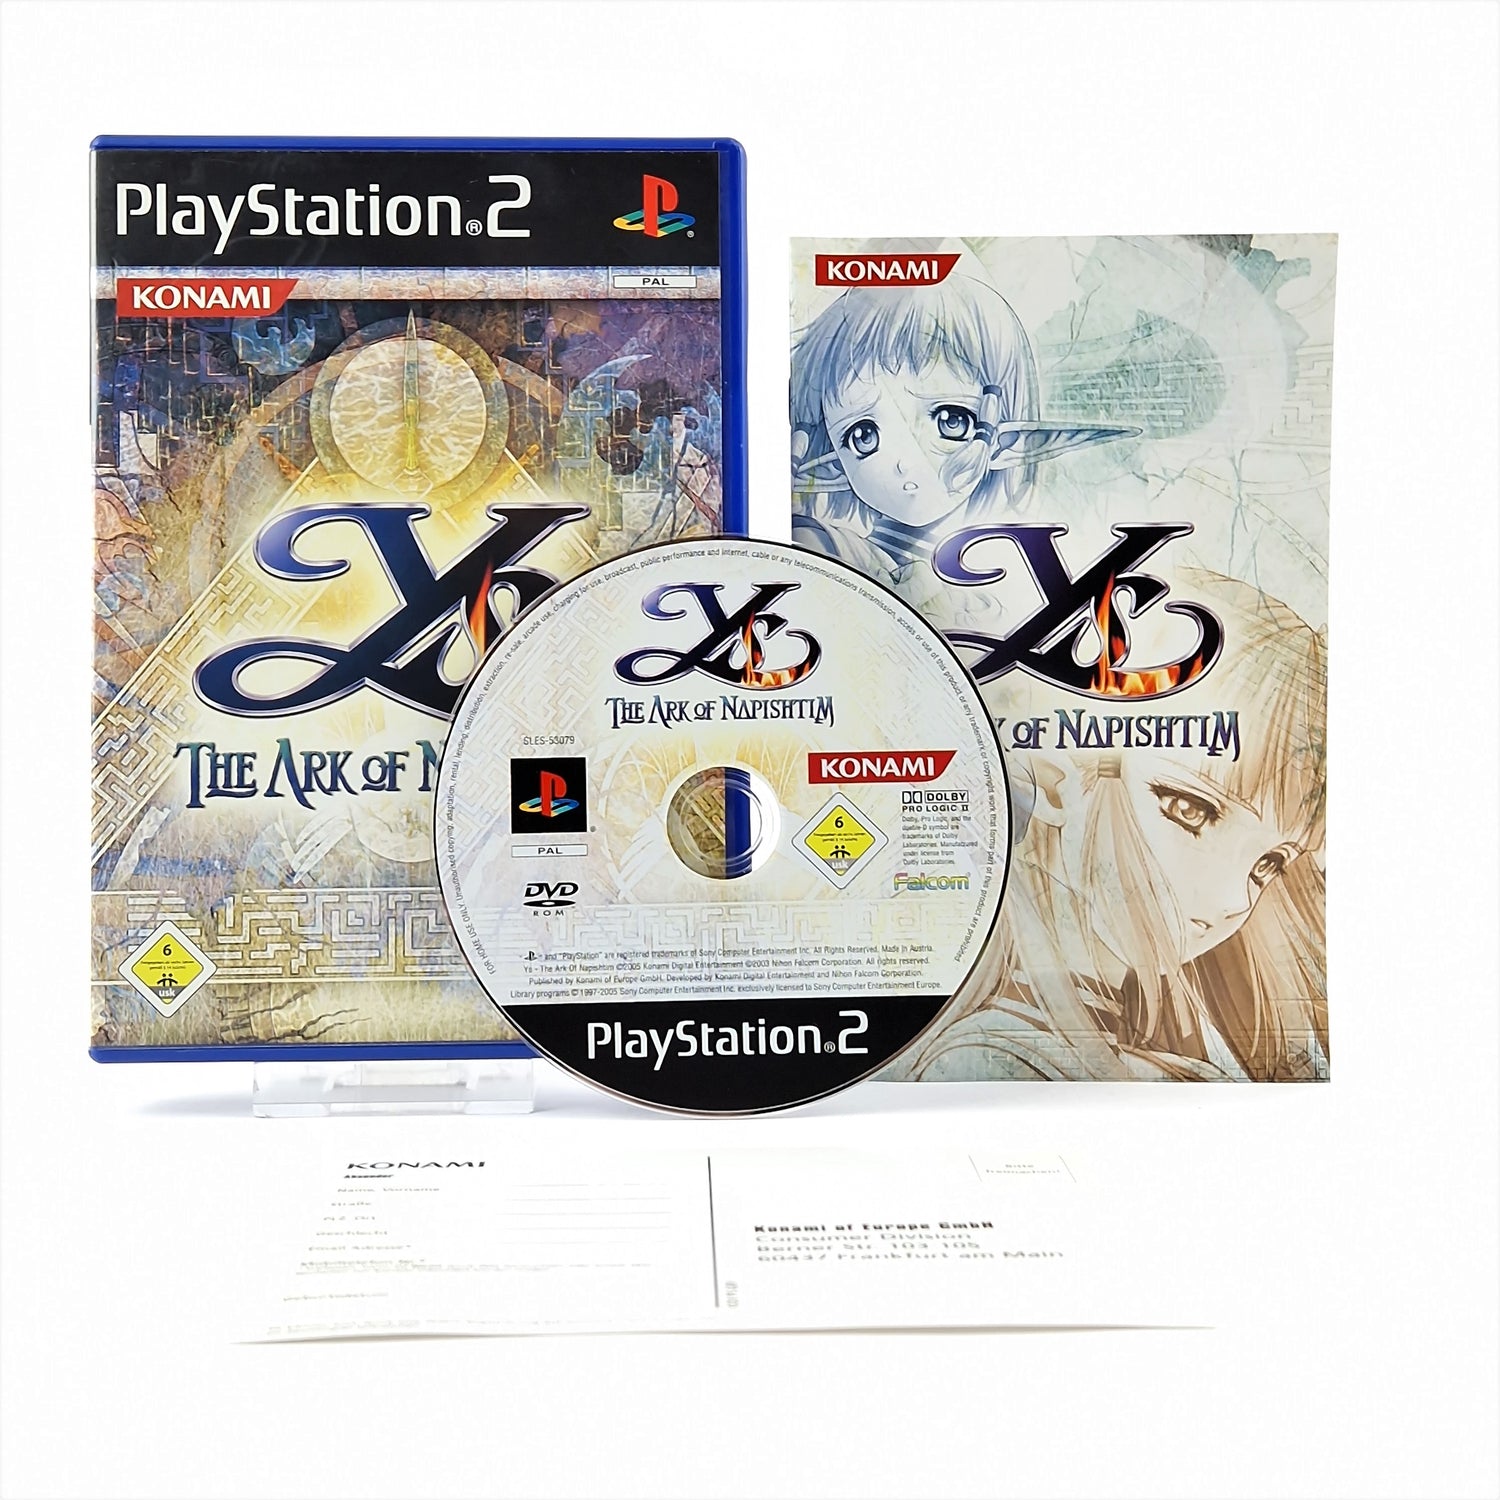 Sony Playstation 2 Game: Ys The Ark of Napishtim - OVP Instructions PAL PS2 Game